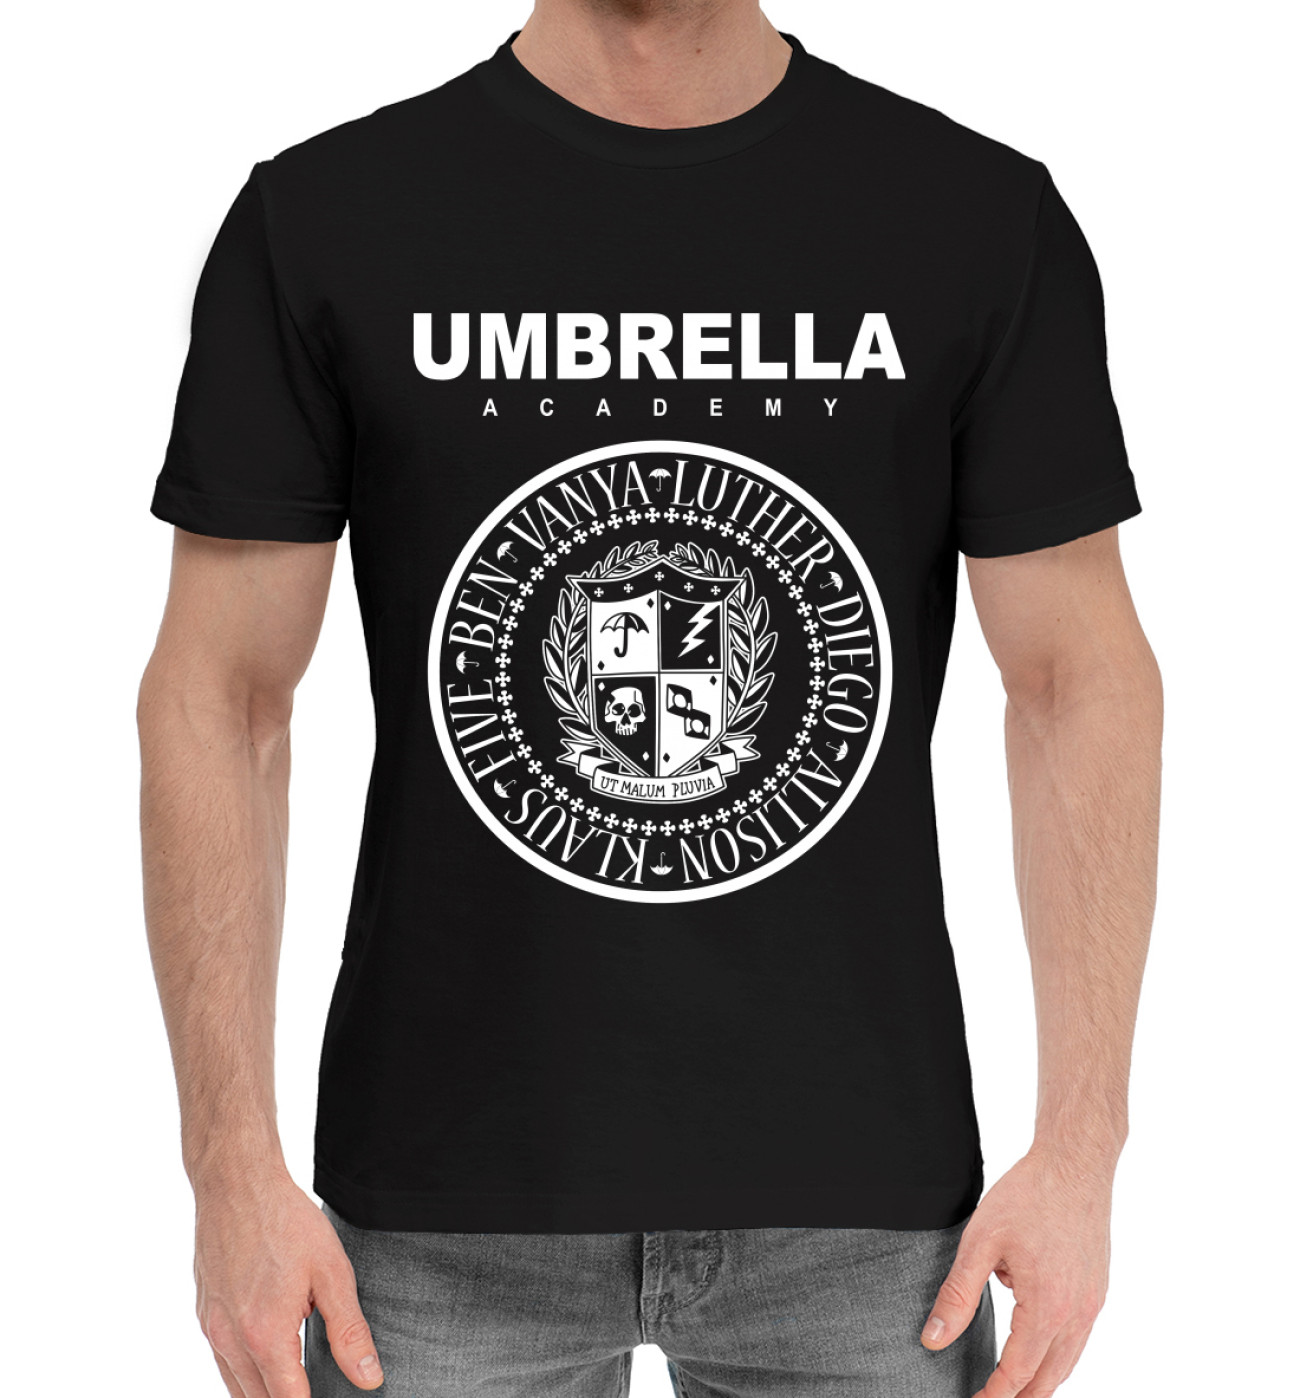 Мужская Хлопковая футболка Академия Амбрелла, артикул: AAL-792435-hfu-2